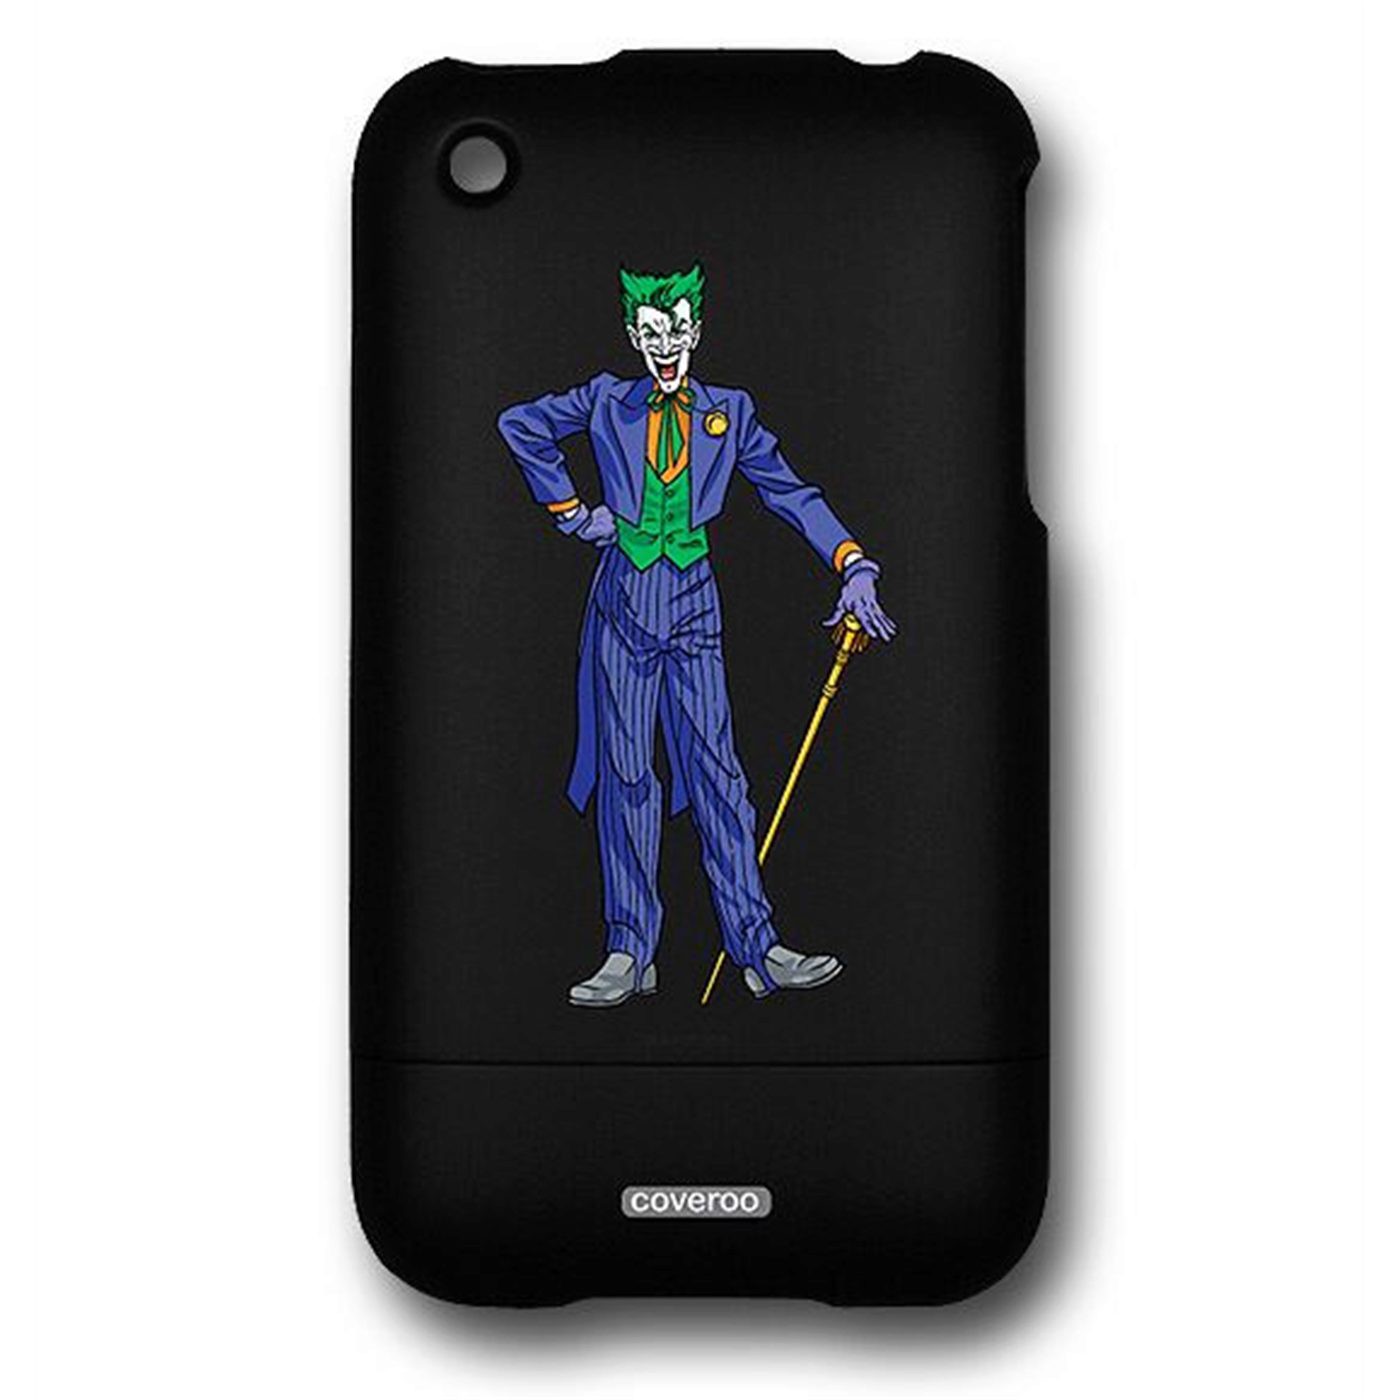 Joker With Cane iPhone 3 Slider Case